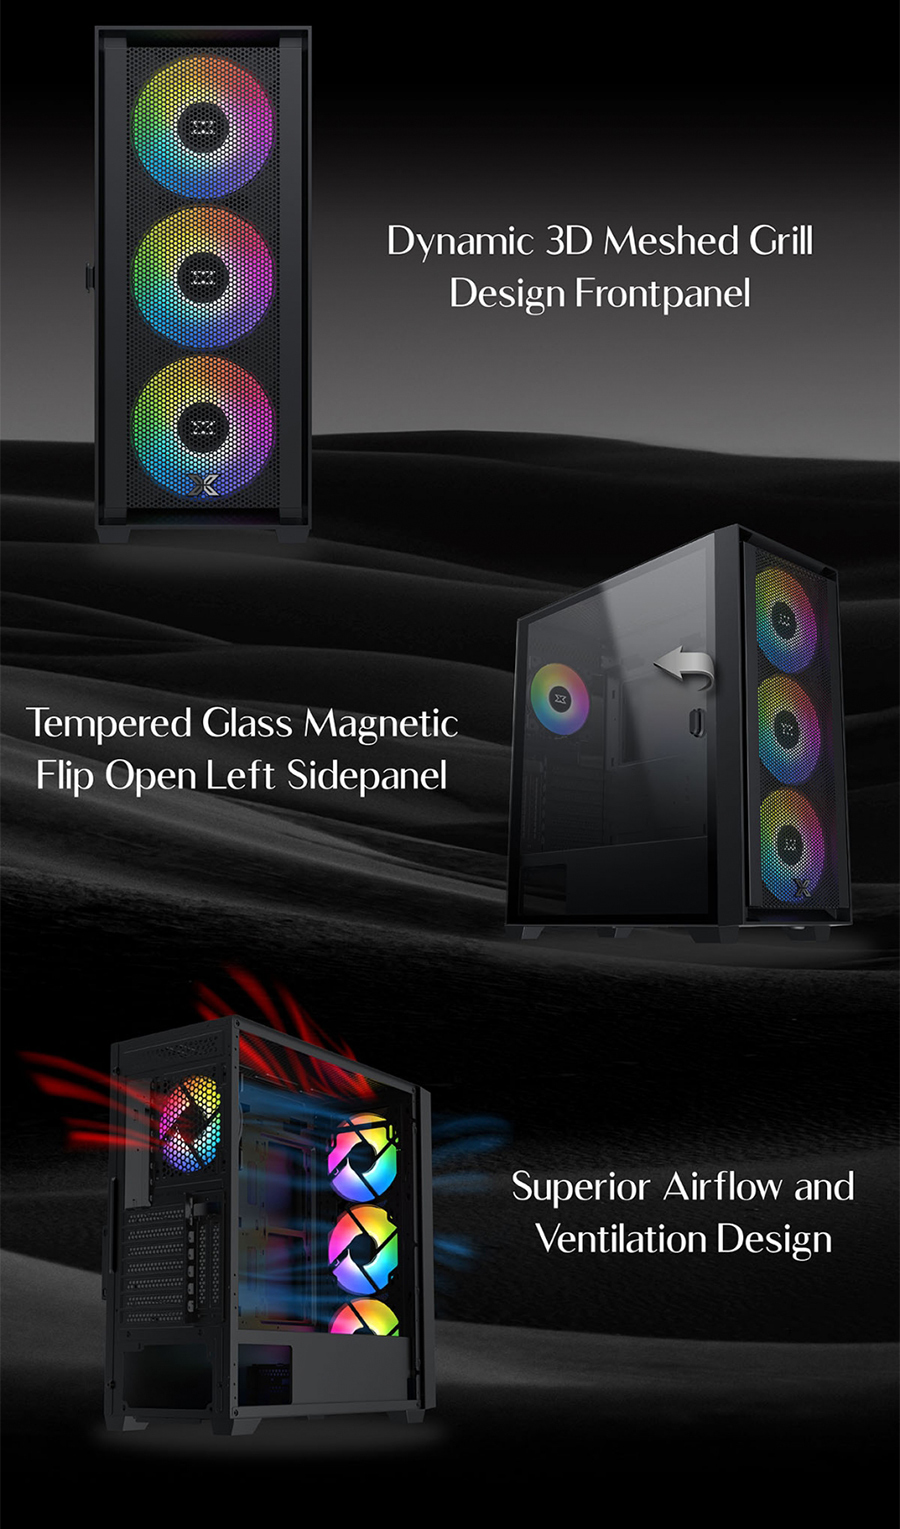 Vỏ Case Xigmatek Anubis Pro 4FX (Black)